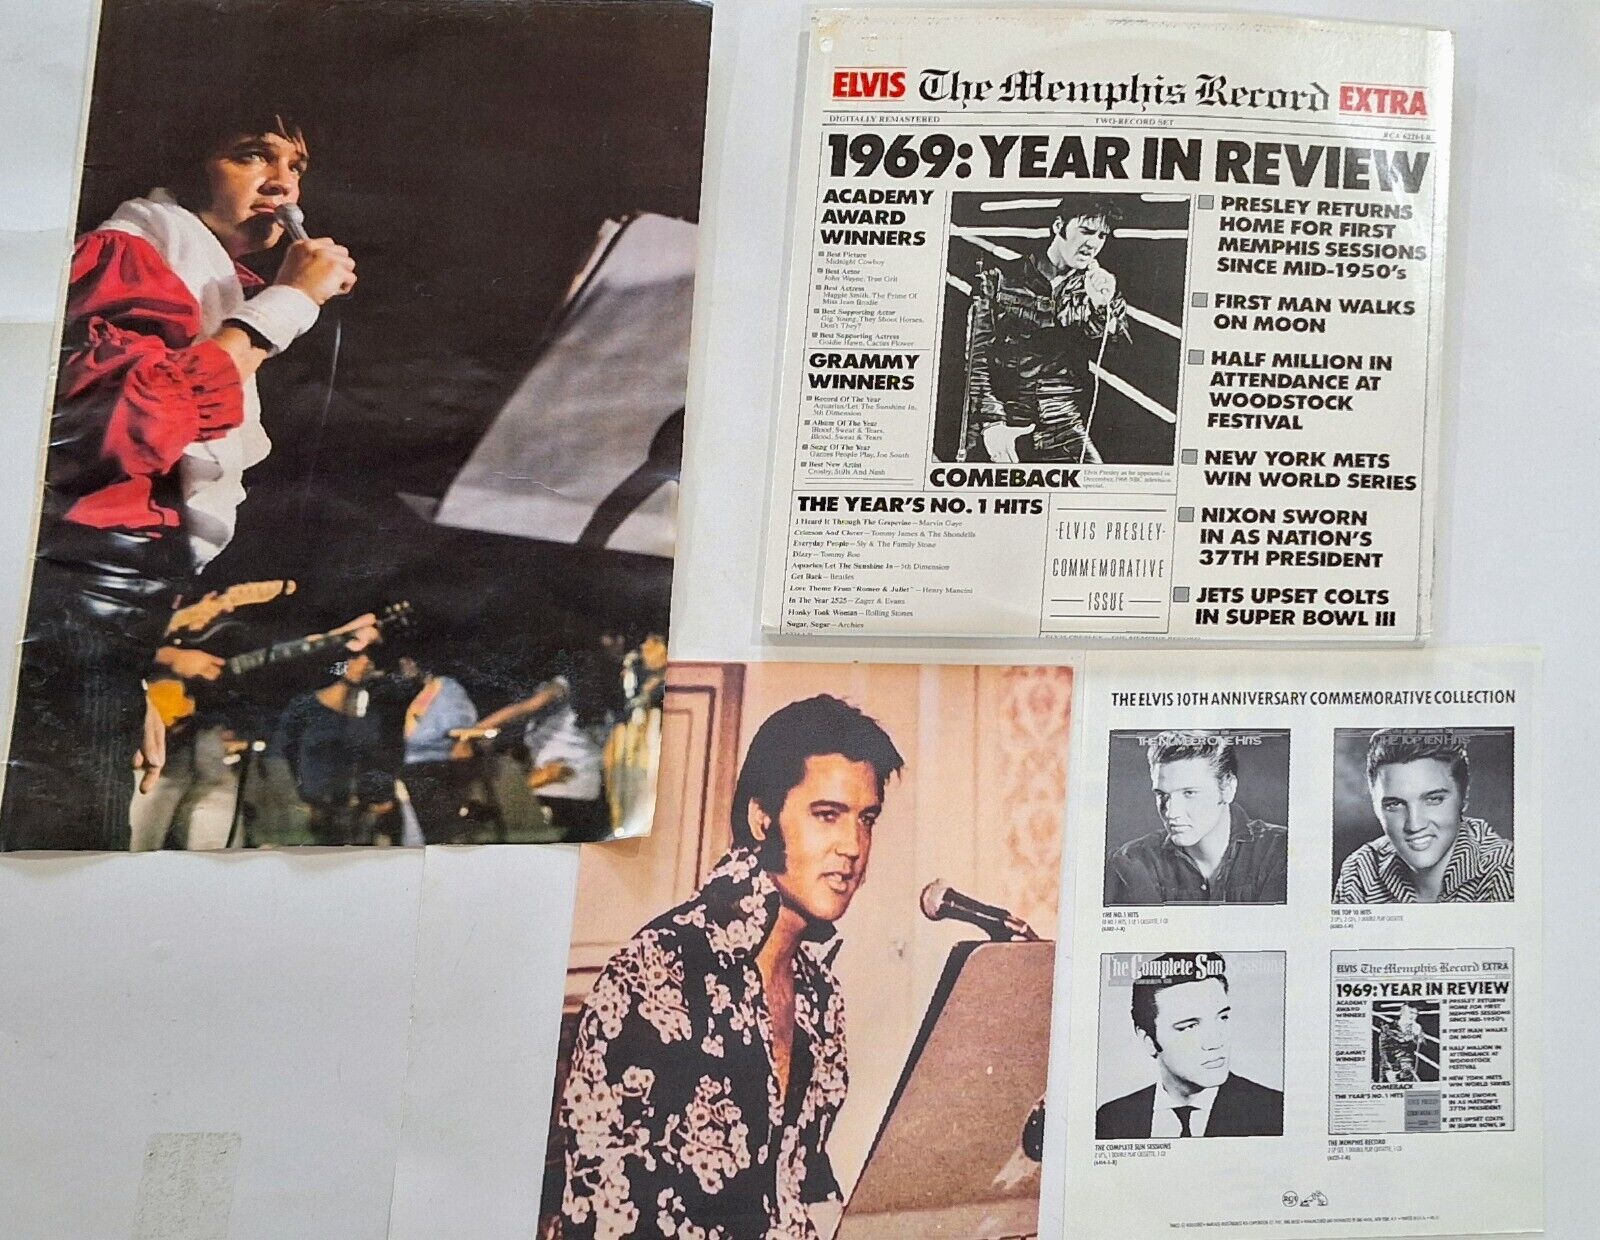 Elvis Presley  The Memphis Record  1969: YEAR IN REVIEW Double Vinyl LP W/incert